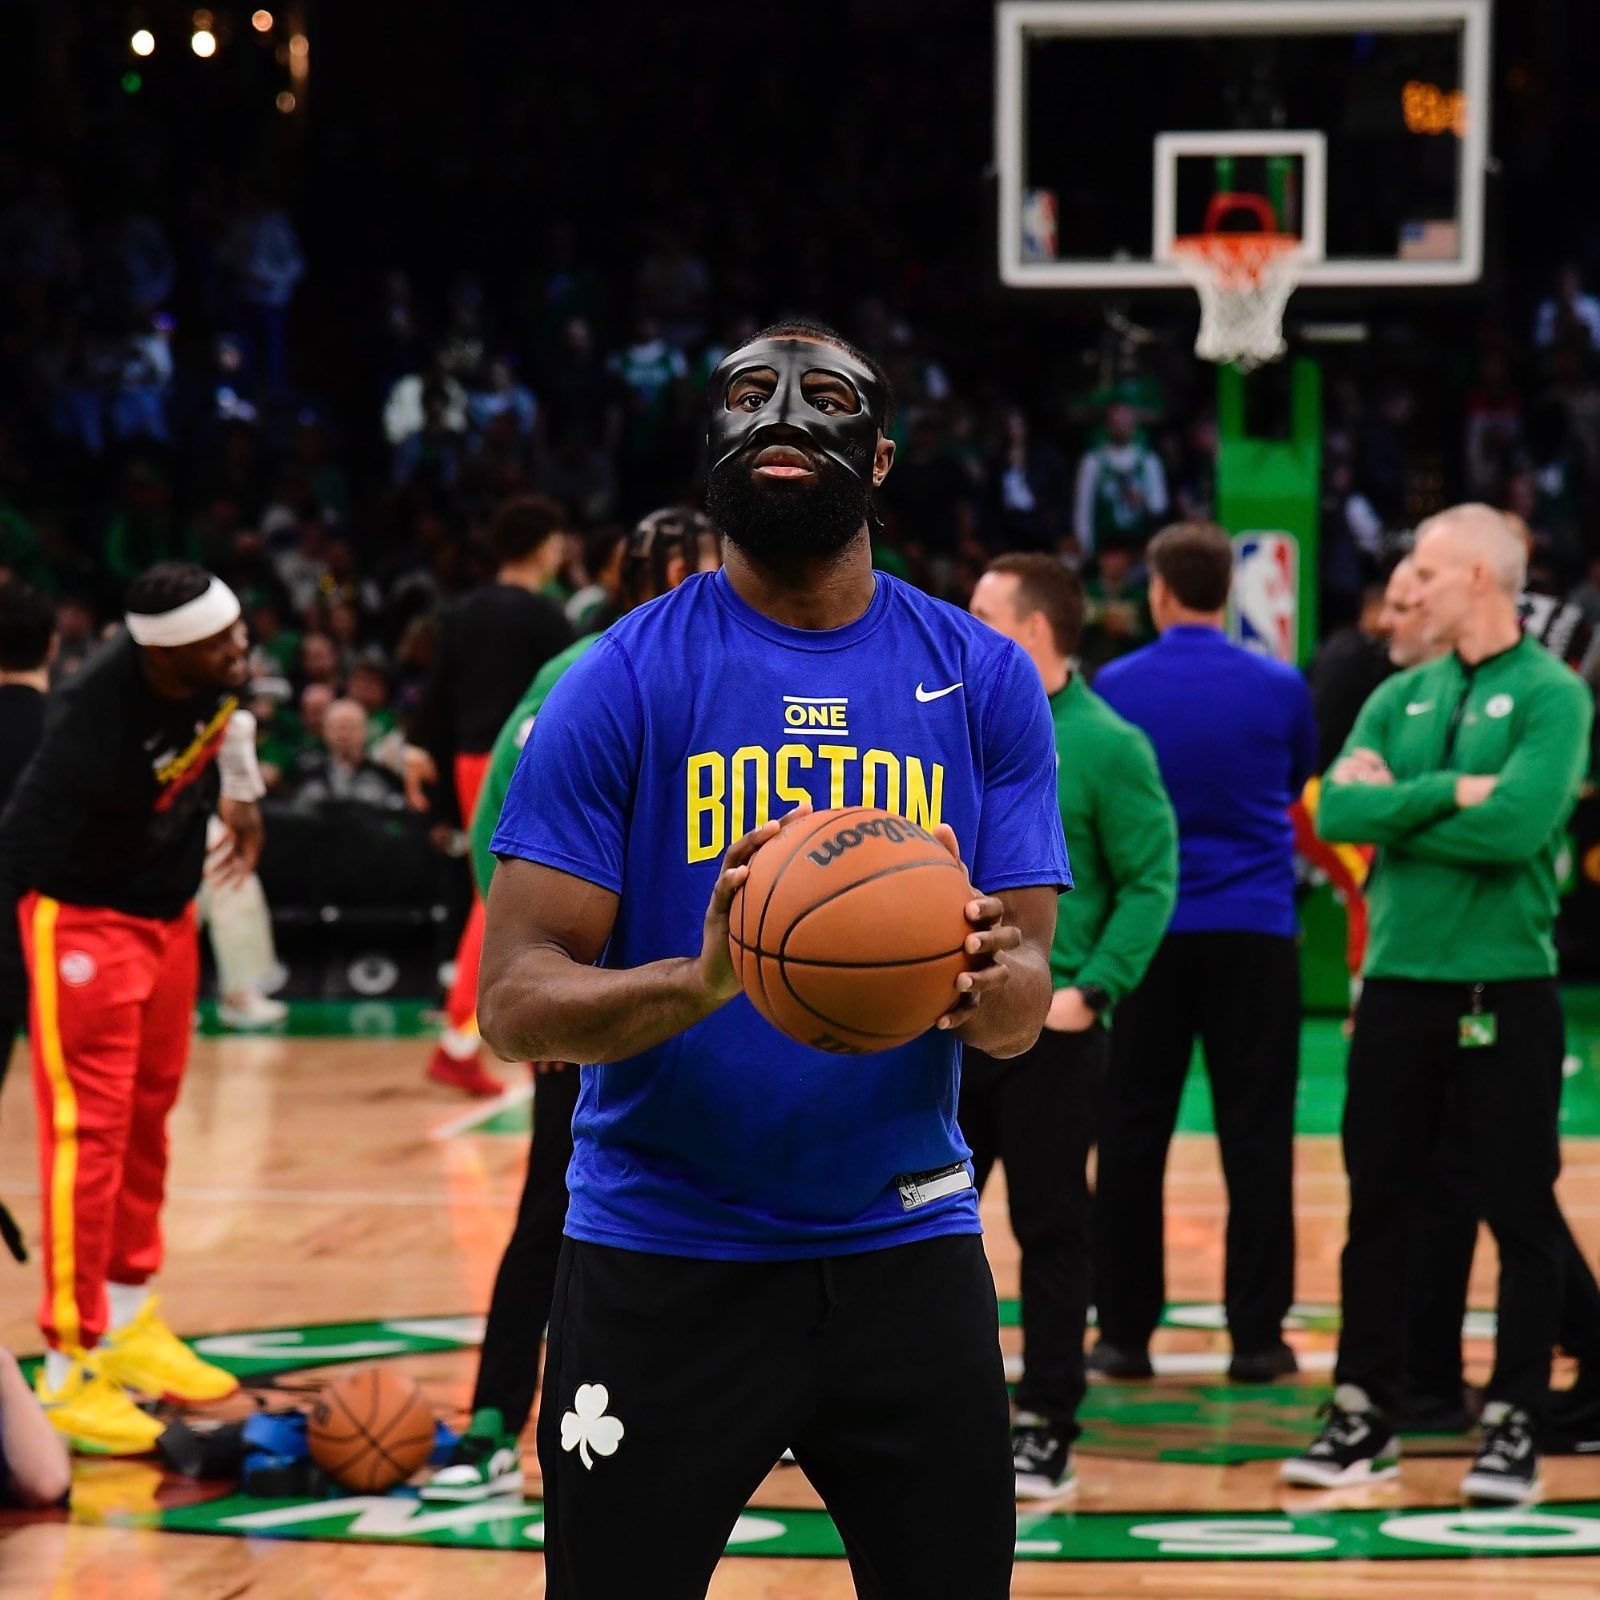 Boston Celtics Win Atlanta The Celtics Are One Win Away From The East Semis  NBA Fan Gifts T-Shirt - Binteez